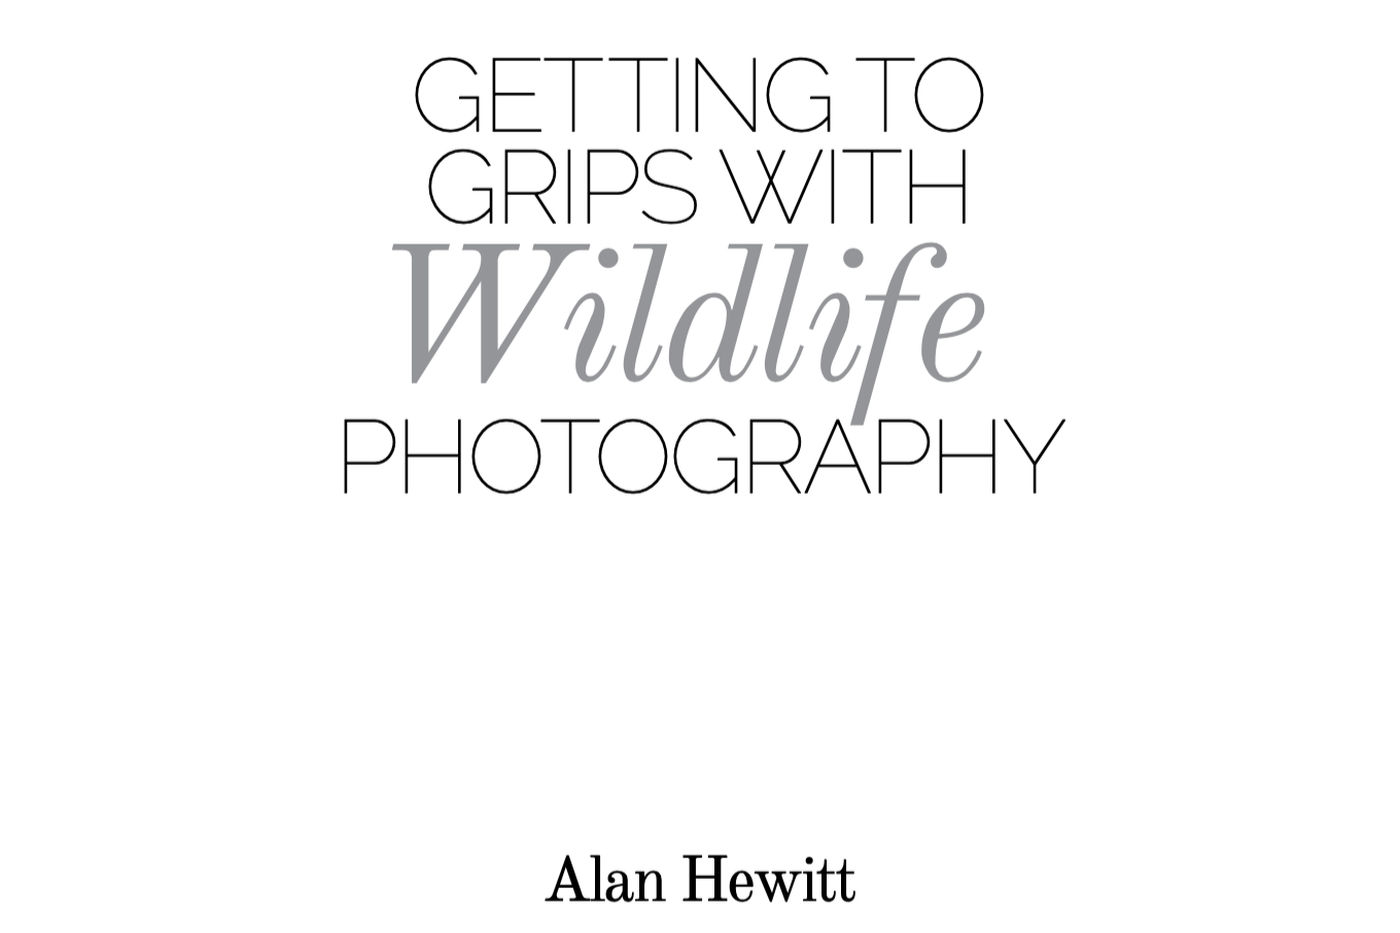 Fujilove Magazine Alan Hewitt Getting to Grips with Wildlife Photography